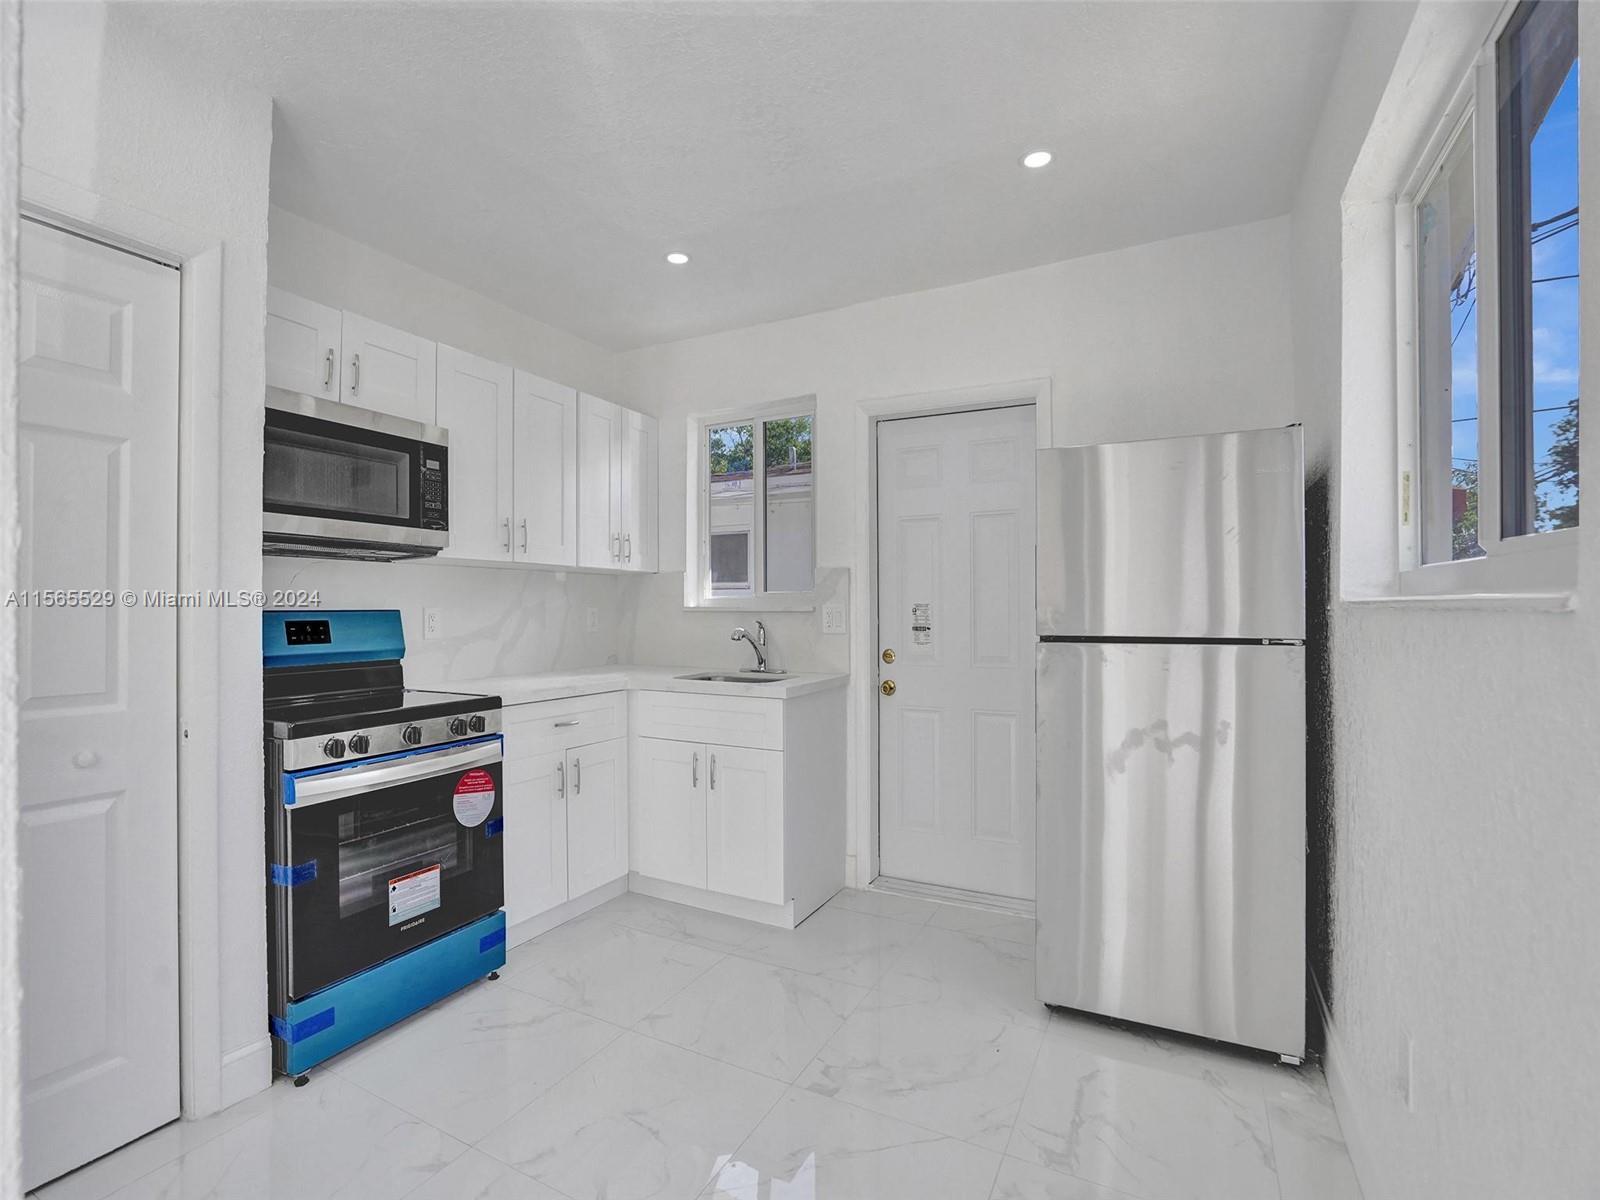 Rental Property at 9597 Ne 168th St, North Miami Beach, Miami-Dade County, Florida -  - $750,000 MO.